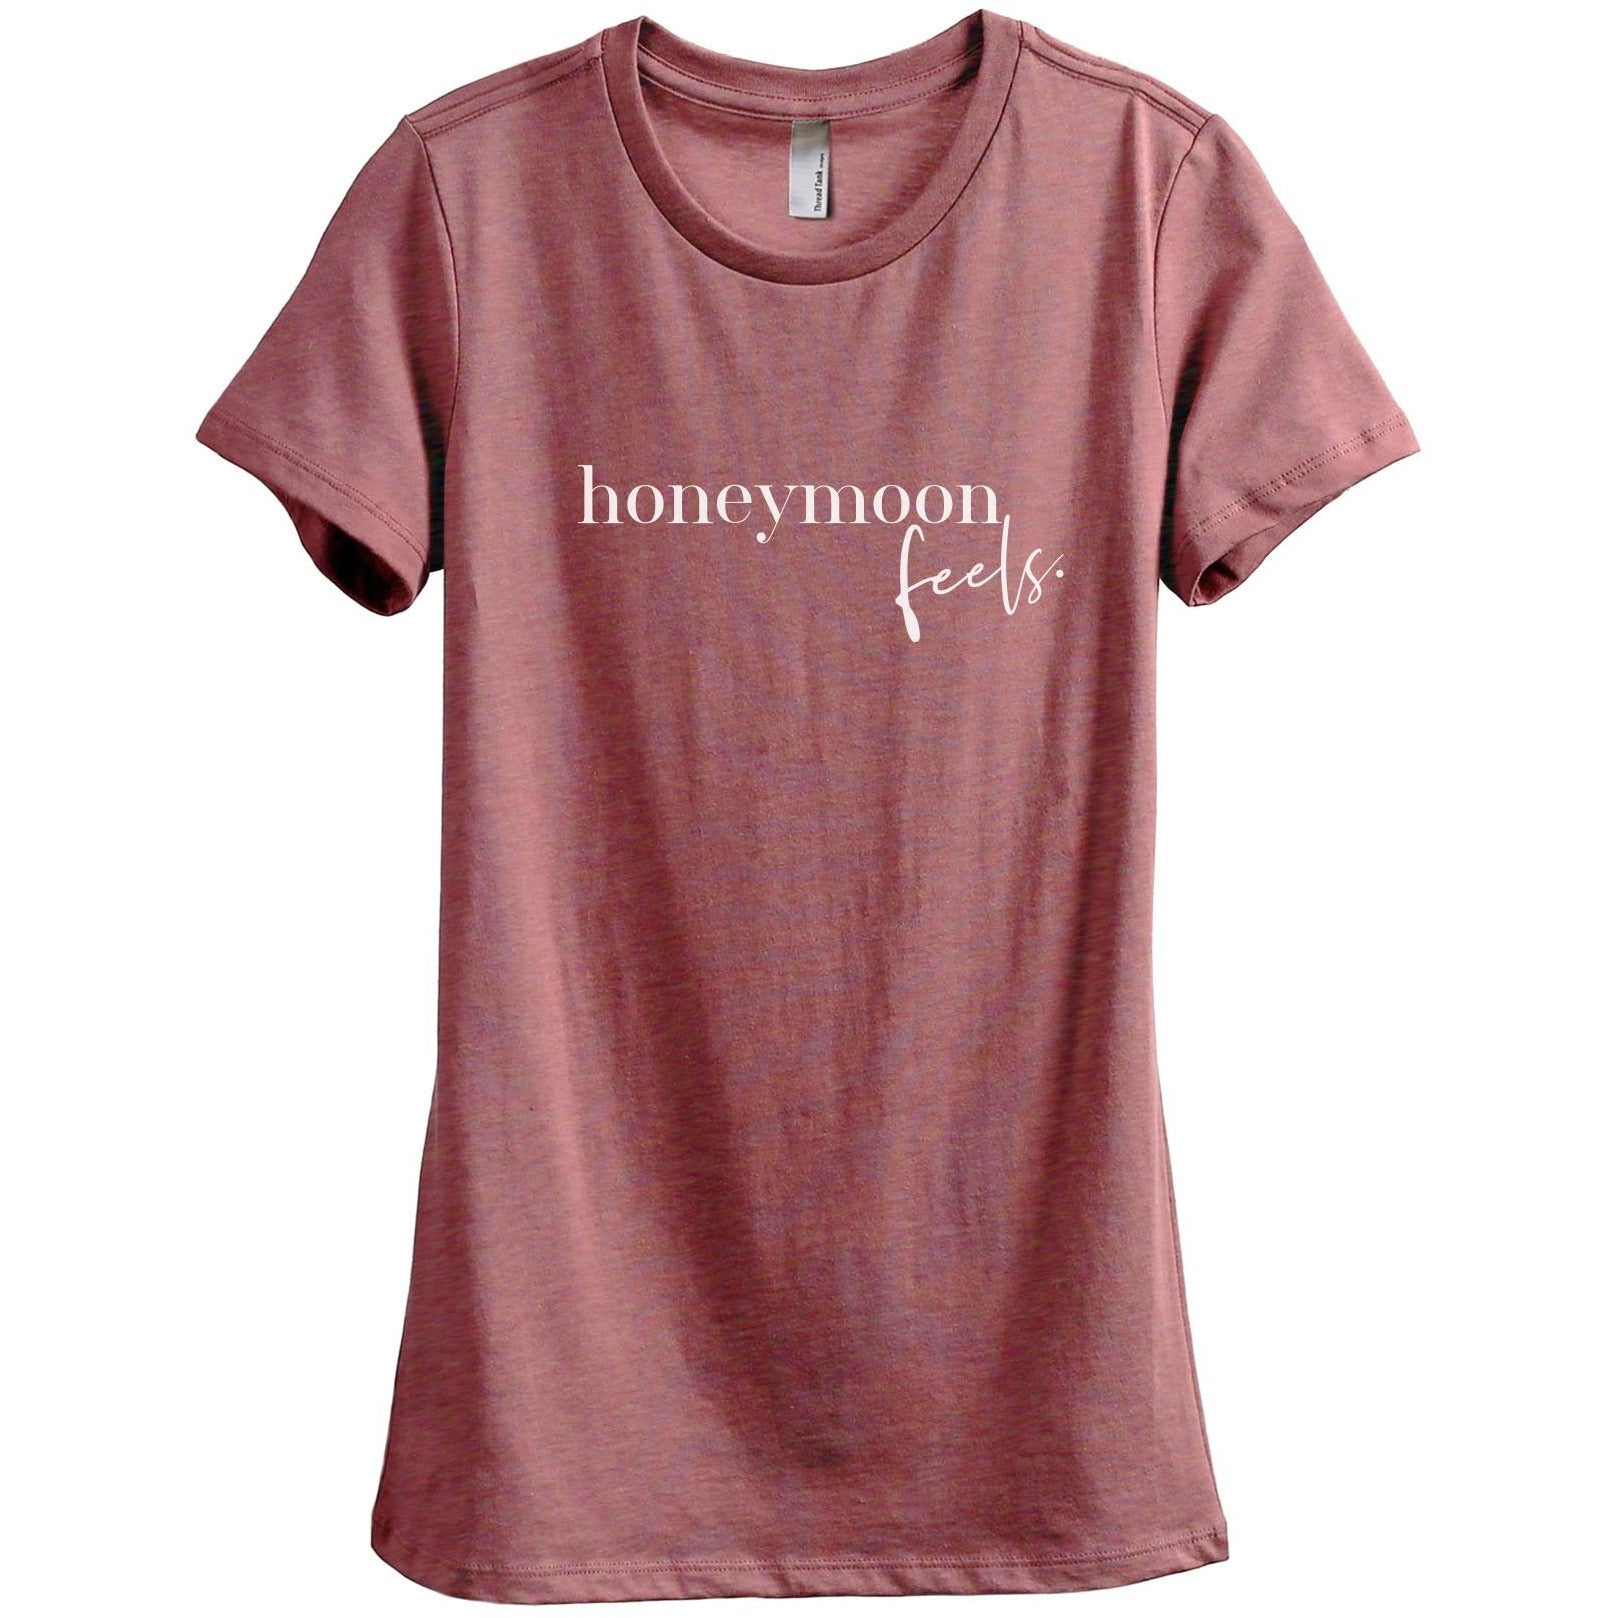 Honeymoon Feels Women's Relaxed Crewneck T-Shirt Top Tee Heather Rouge
